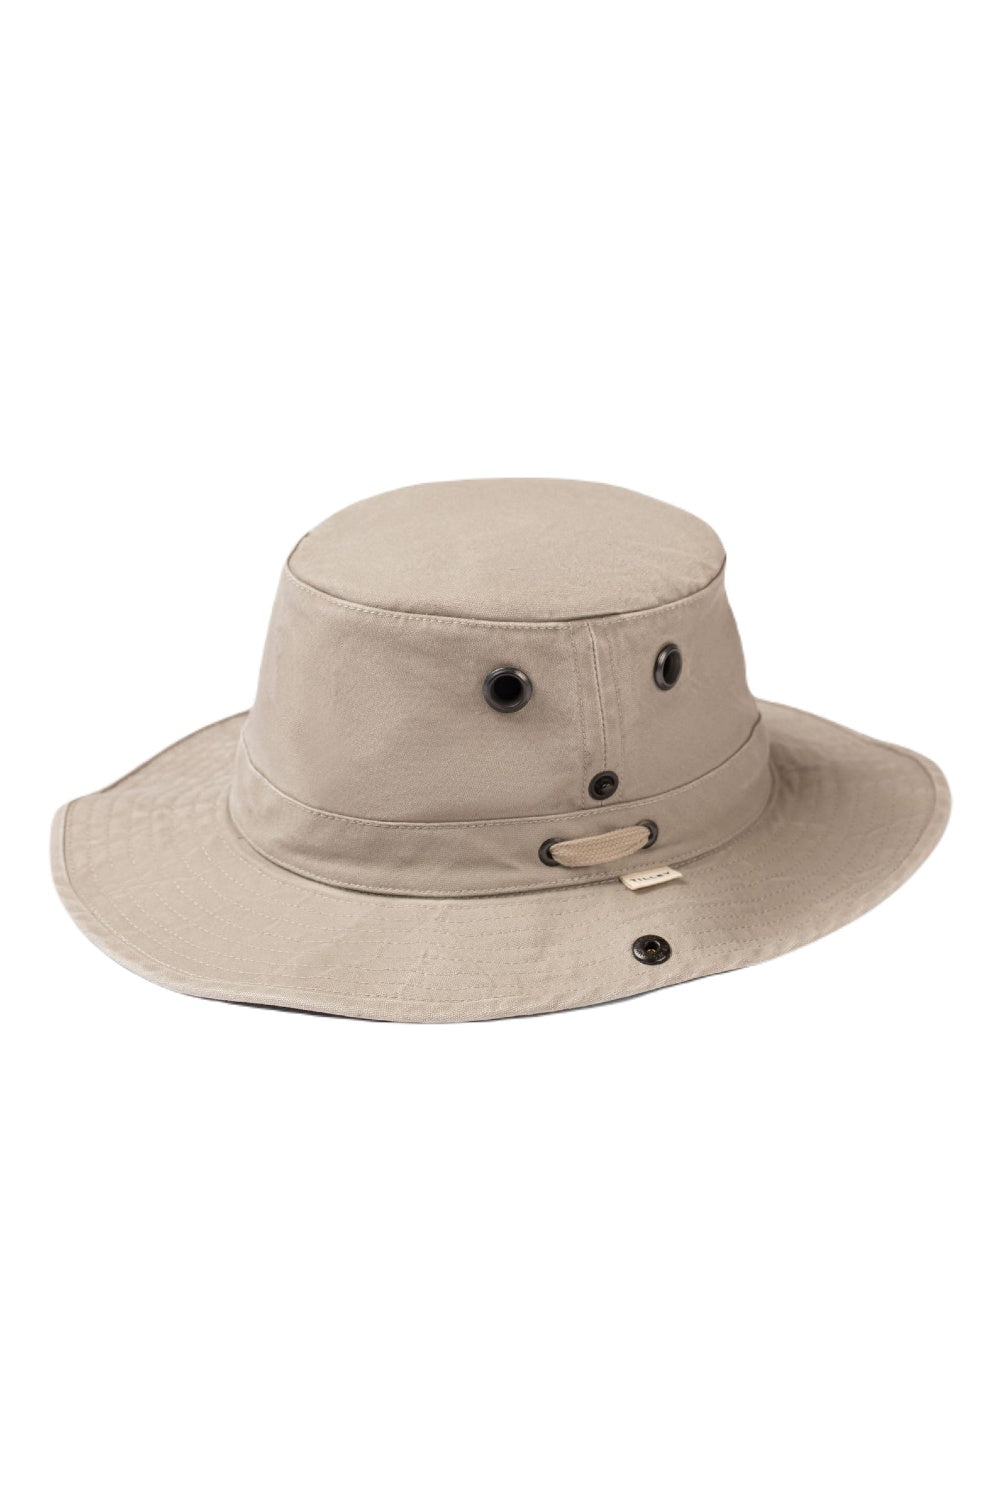 Tilley Hats in Canada - Henri Henri